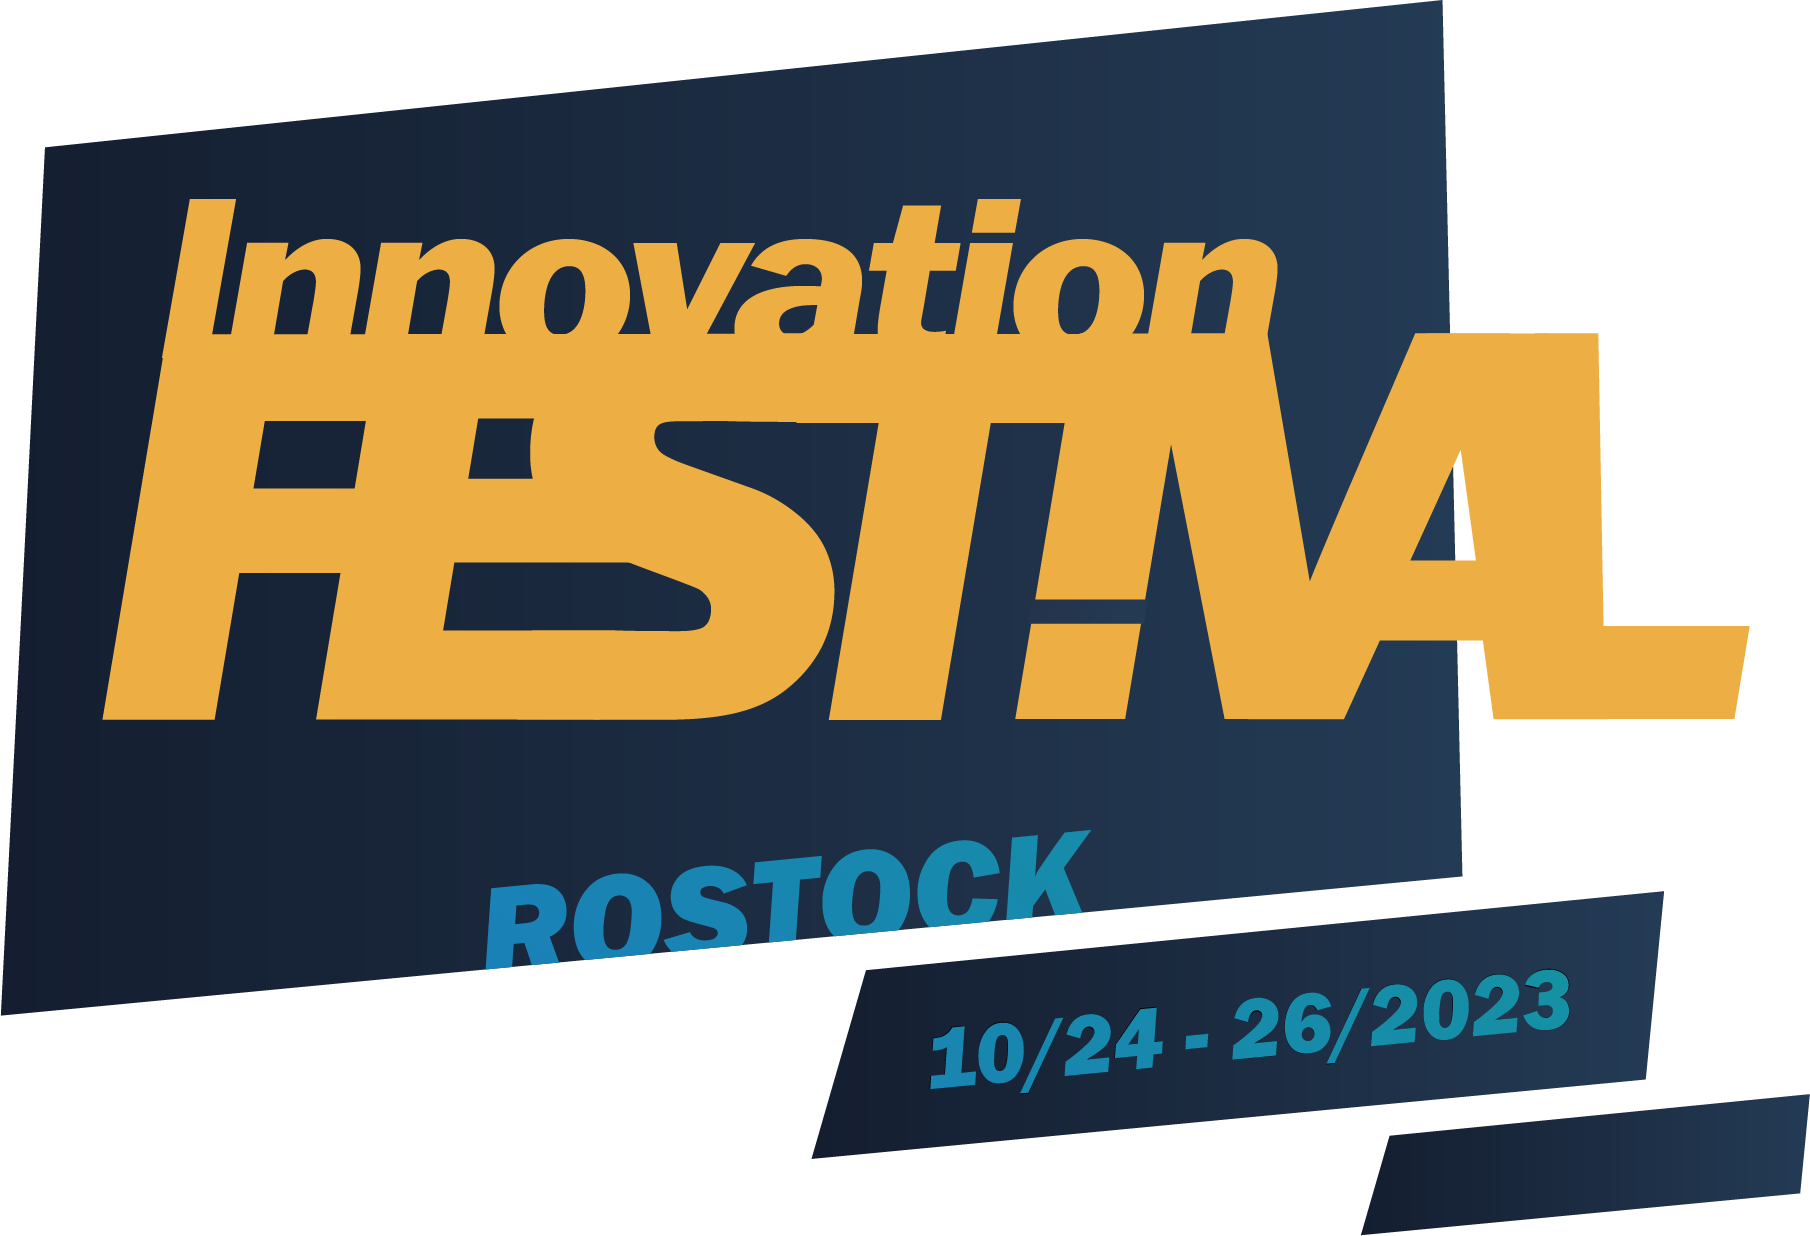 Innovation Festival Rostock